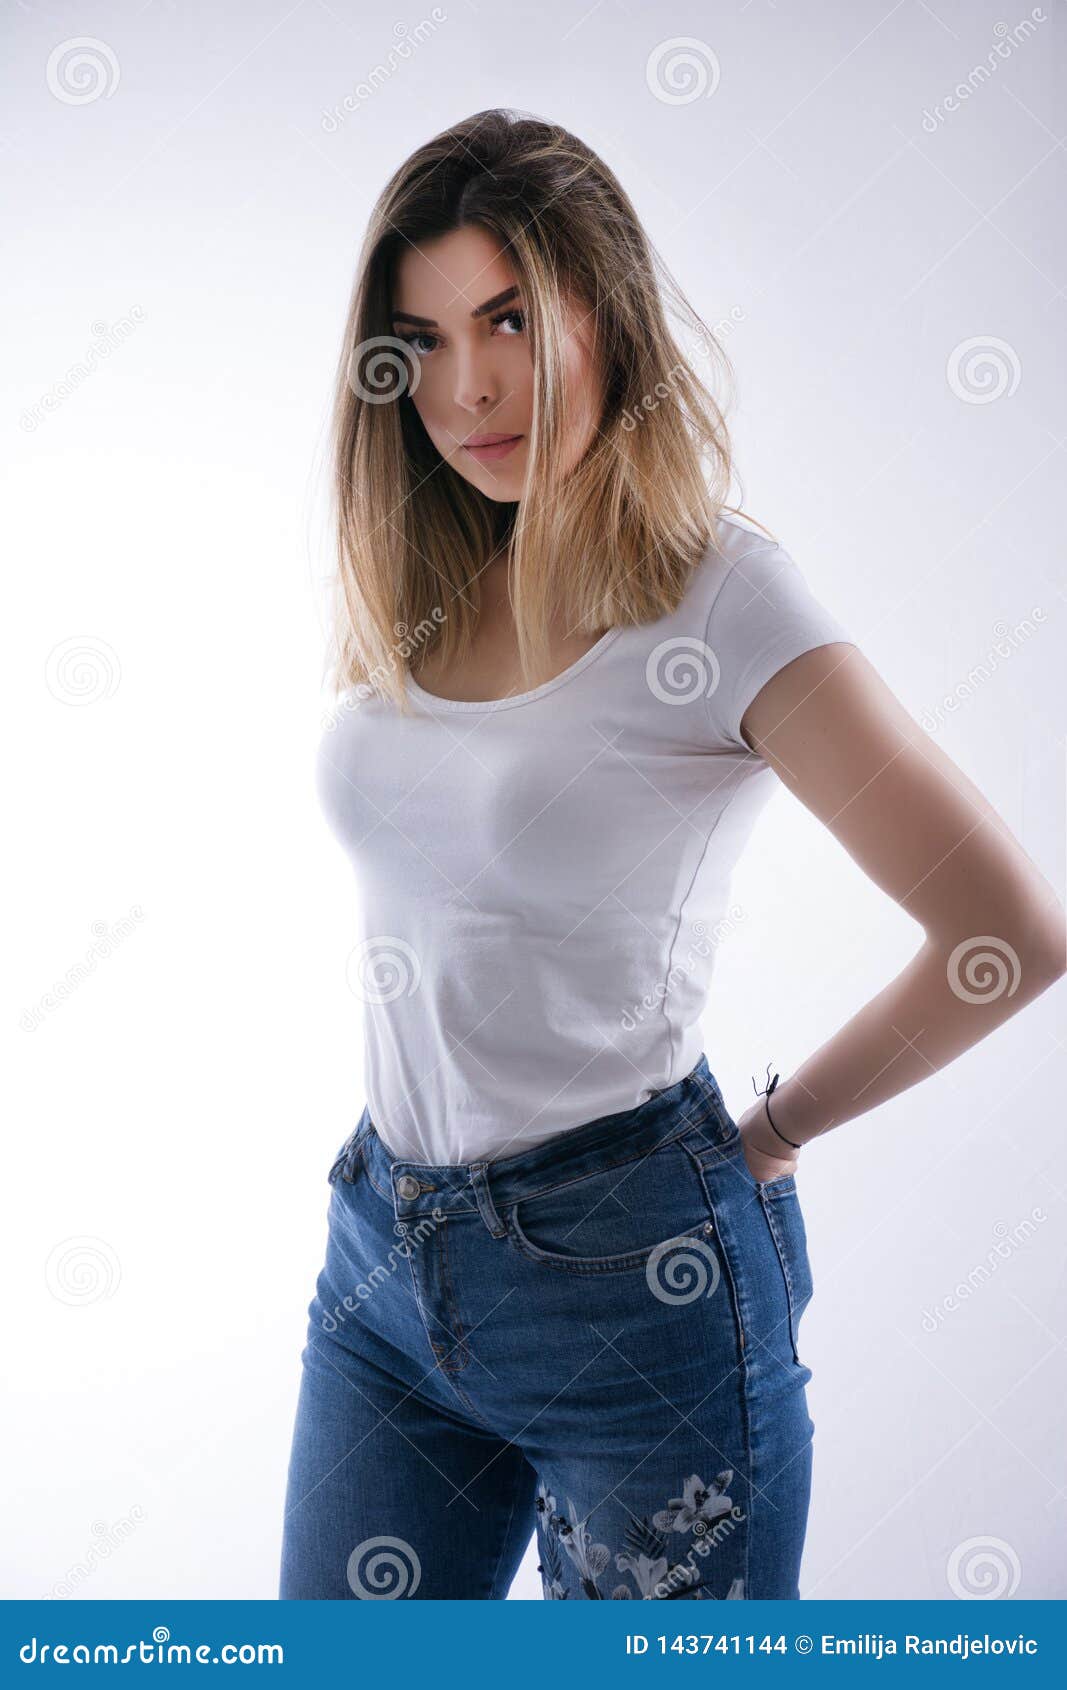 White girl big ass